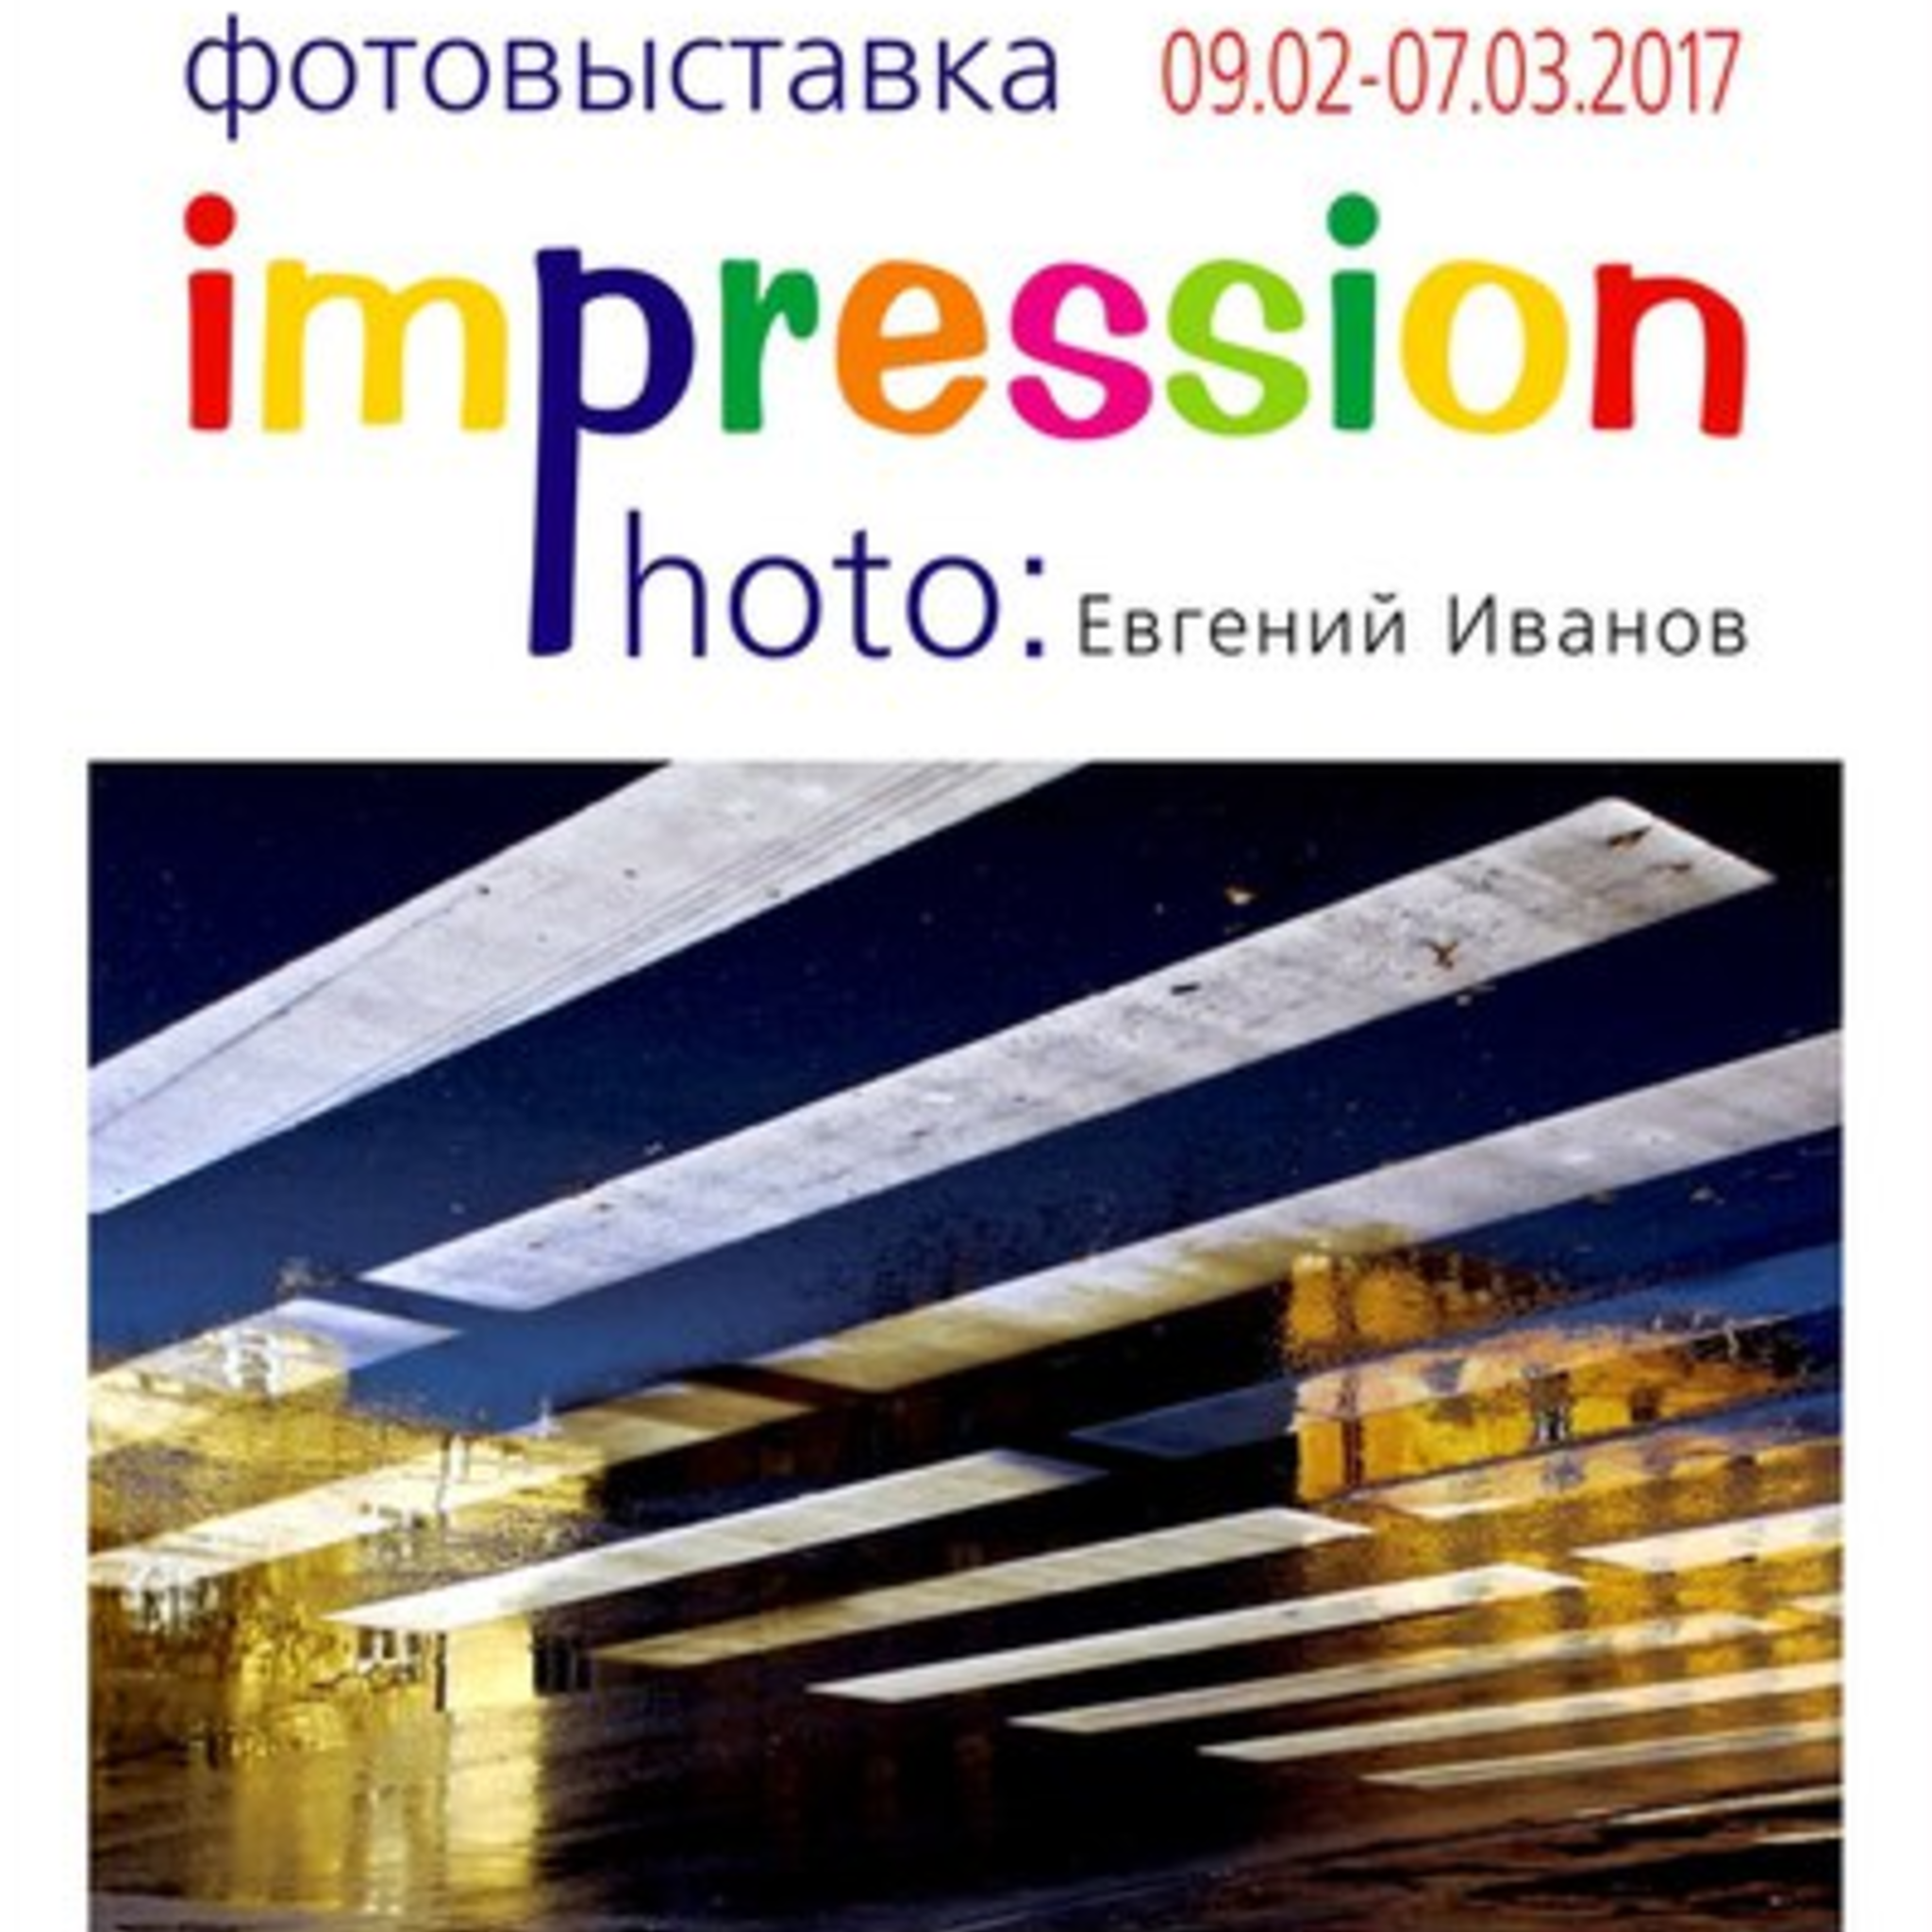 Evgenia Ivanova Photo exhibition Impression